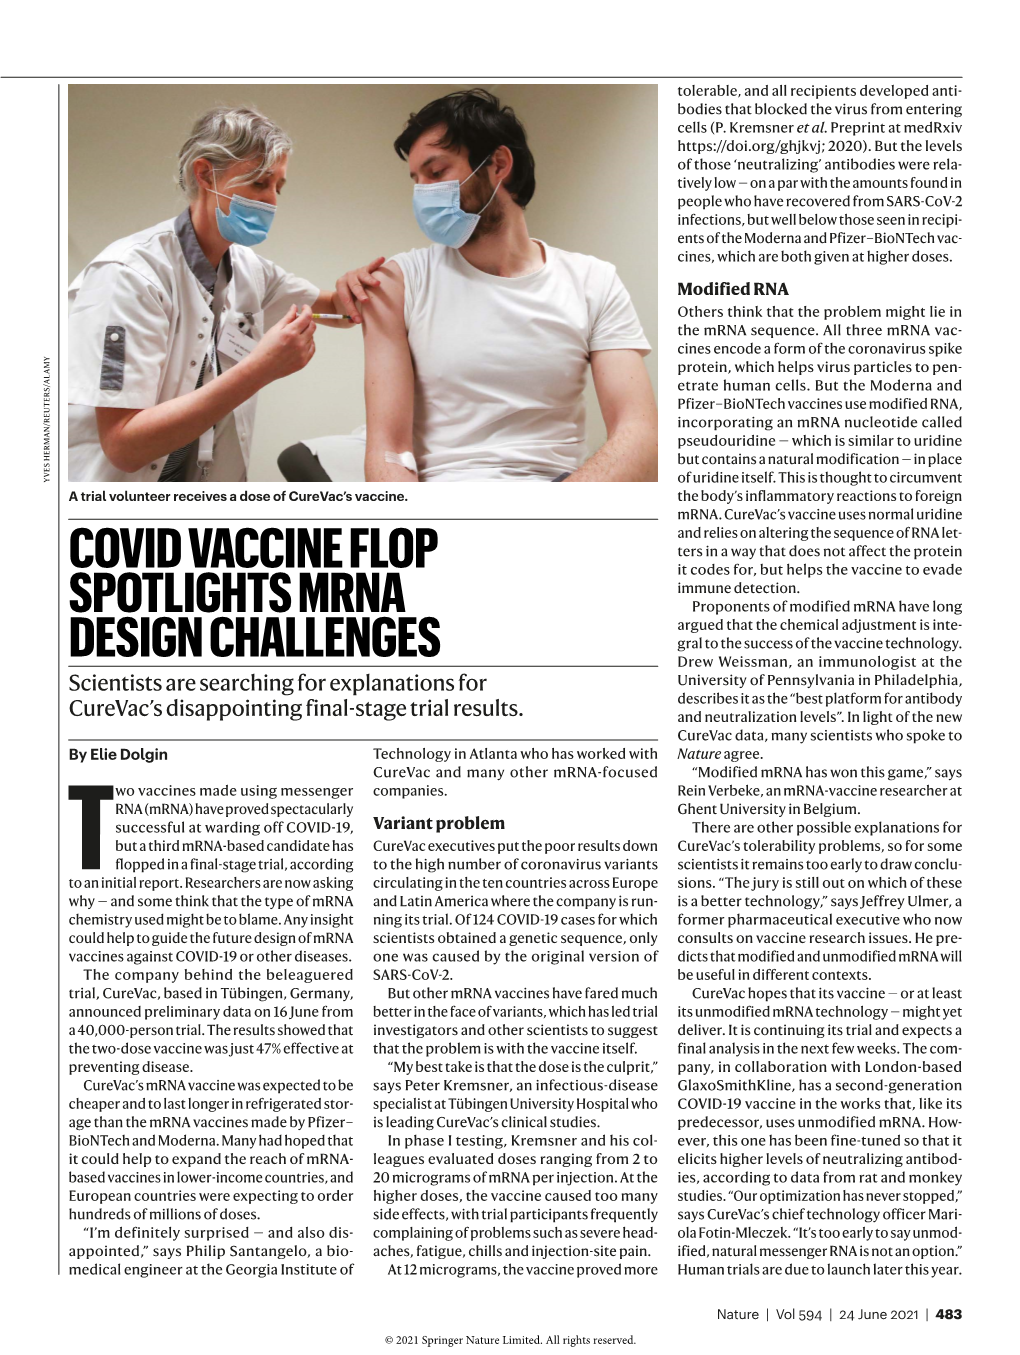 Covid Vaccine Flop Spotlights Mrna Design Challenges